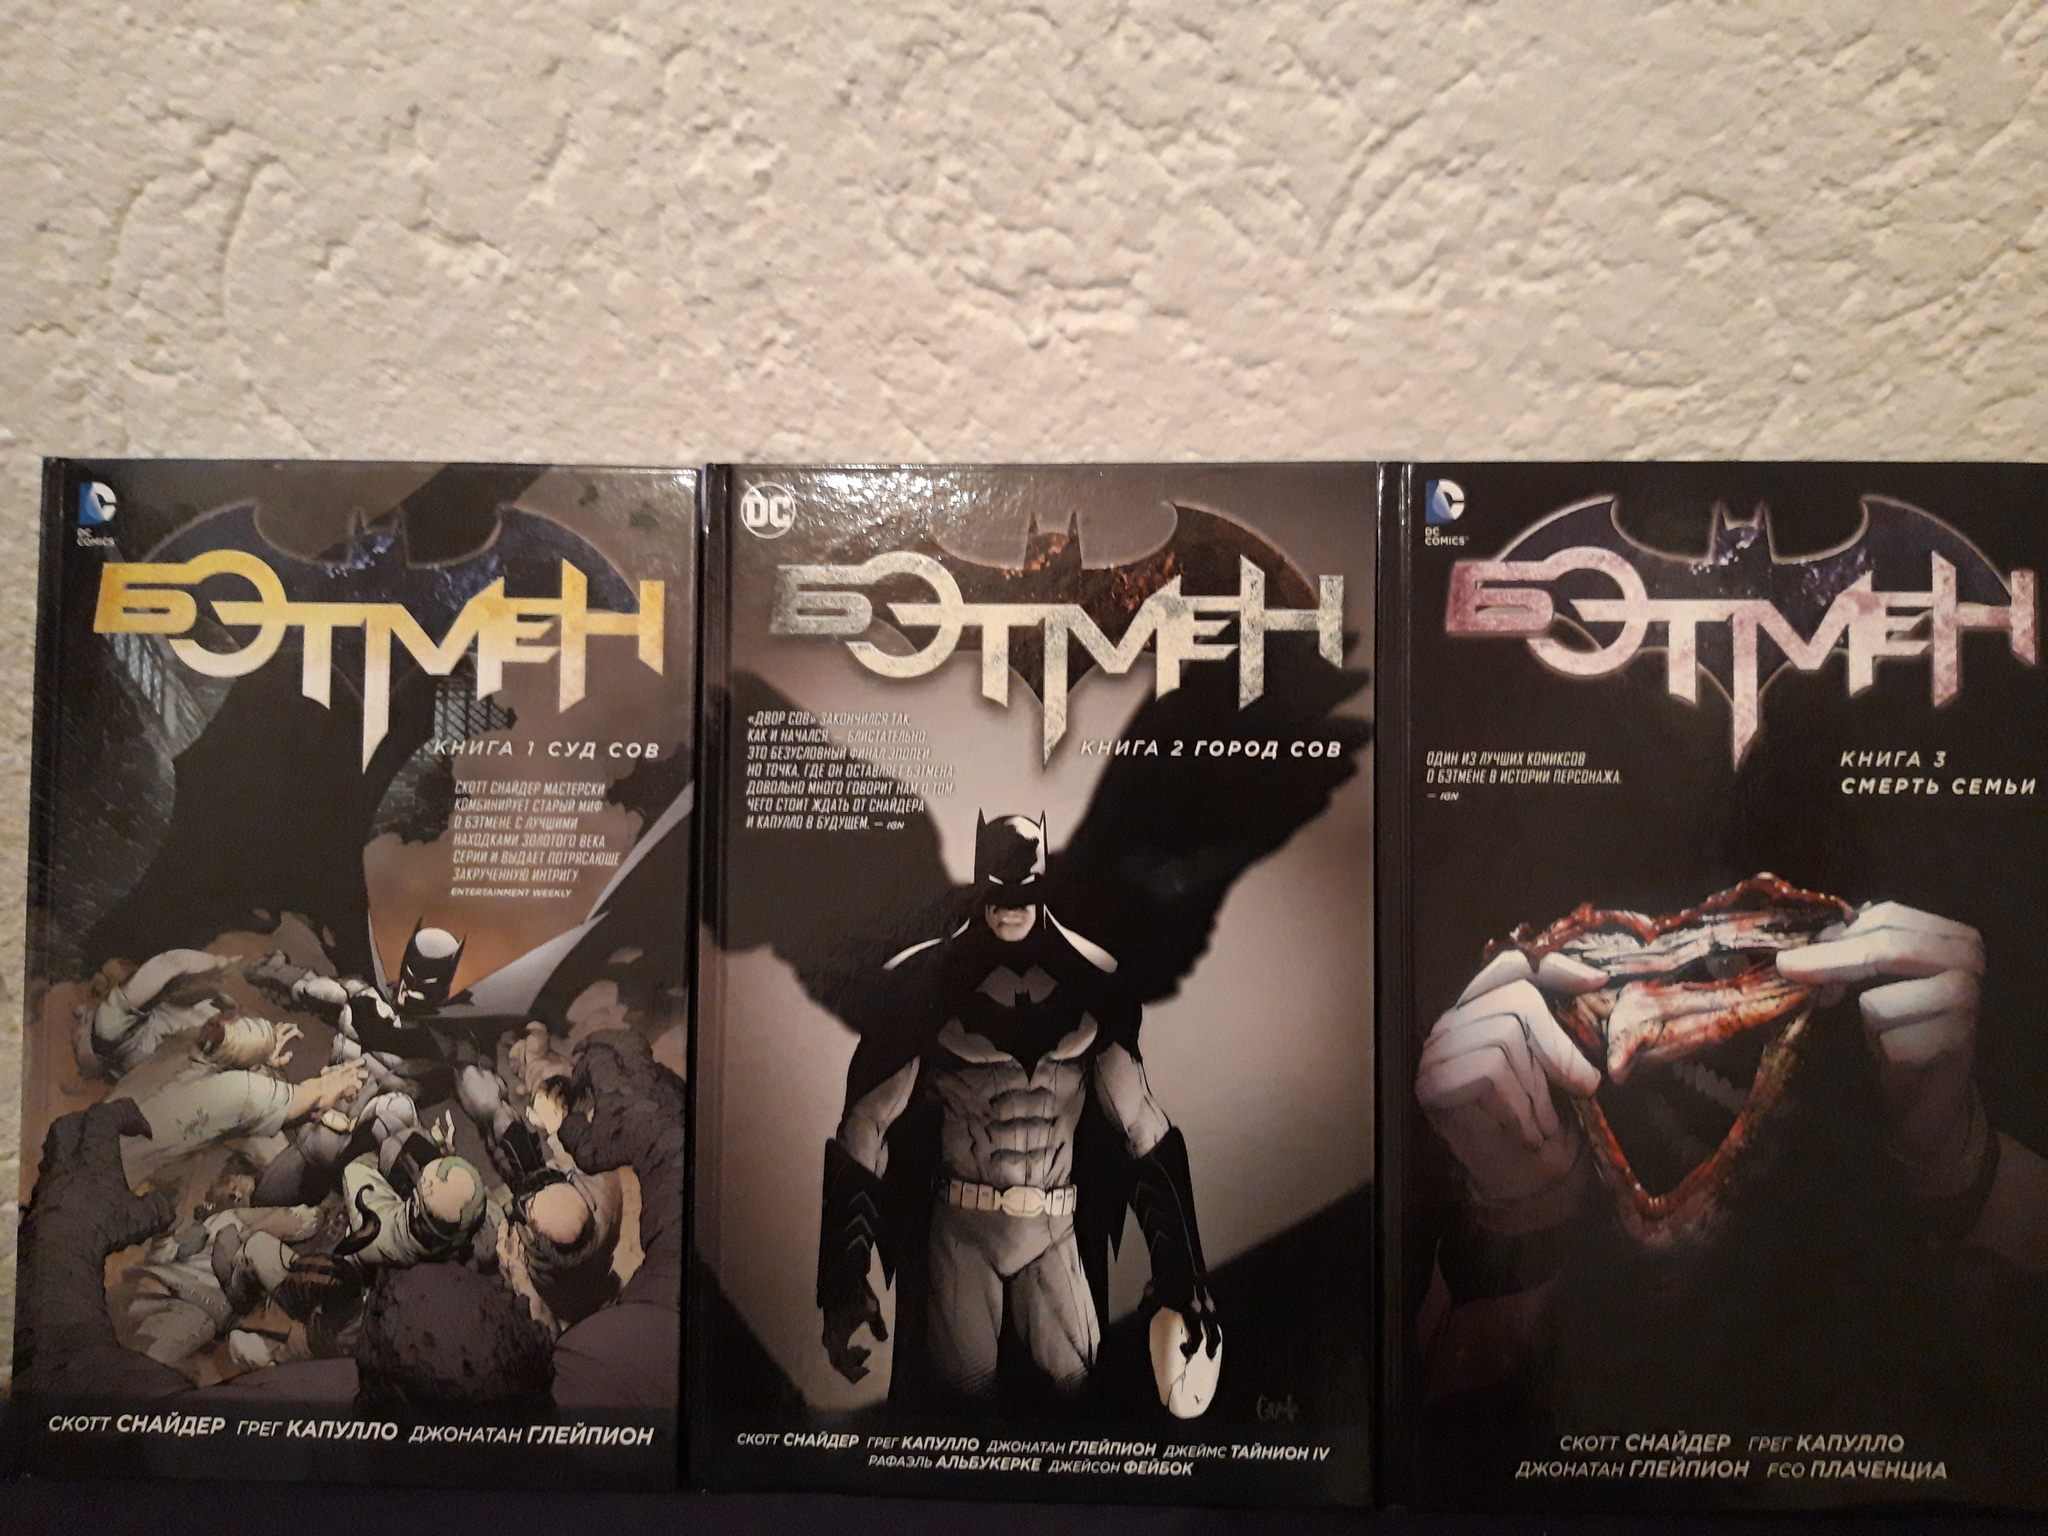 My Batman Collection - Collection, Batman, Comics, Dc comics, Books, GIF, Longpost